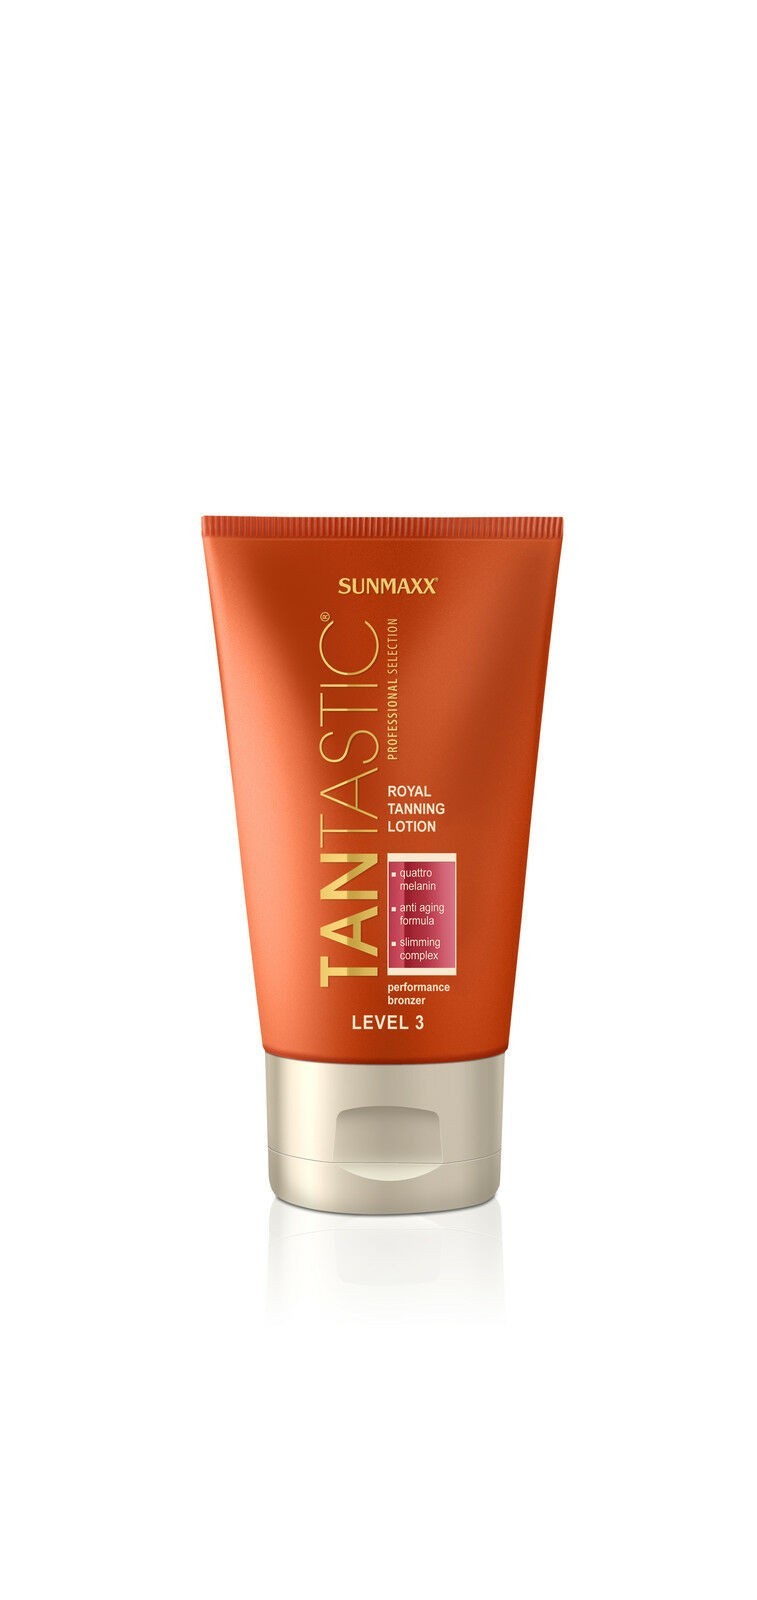 sunmaxx-tantastic-royal-tanning-lotion-level-3-70ml